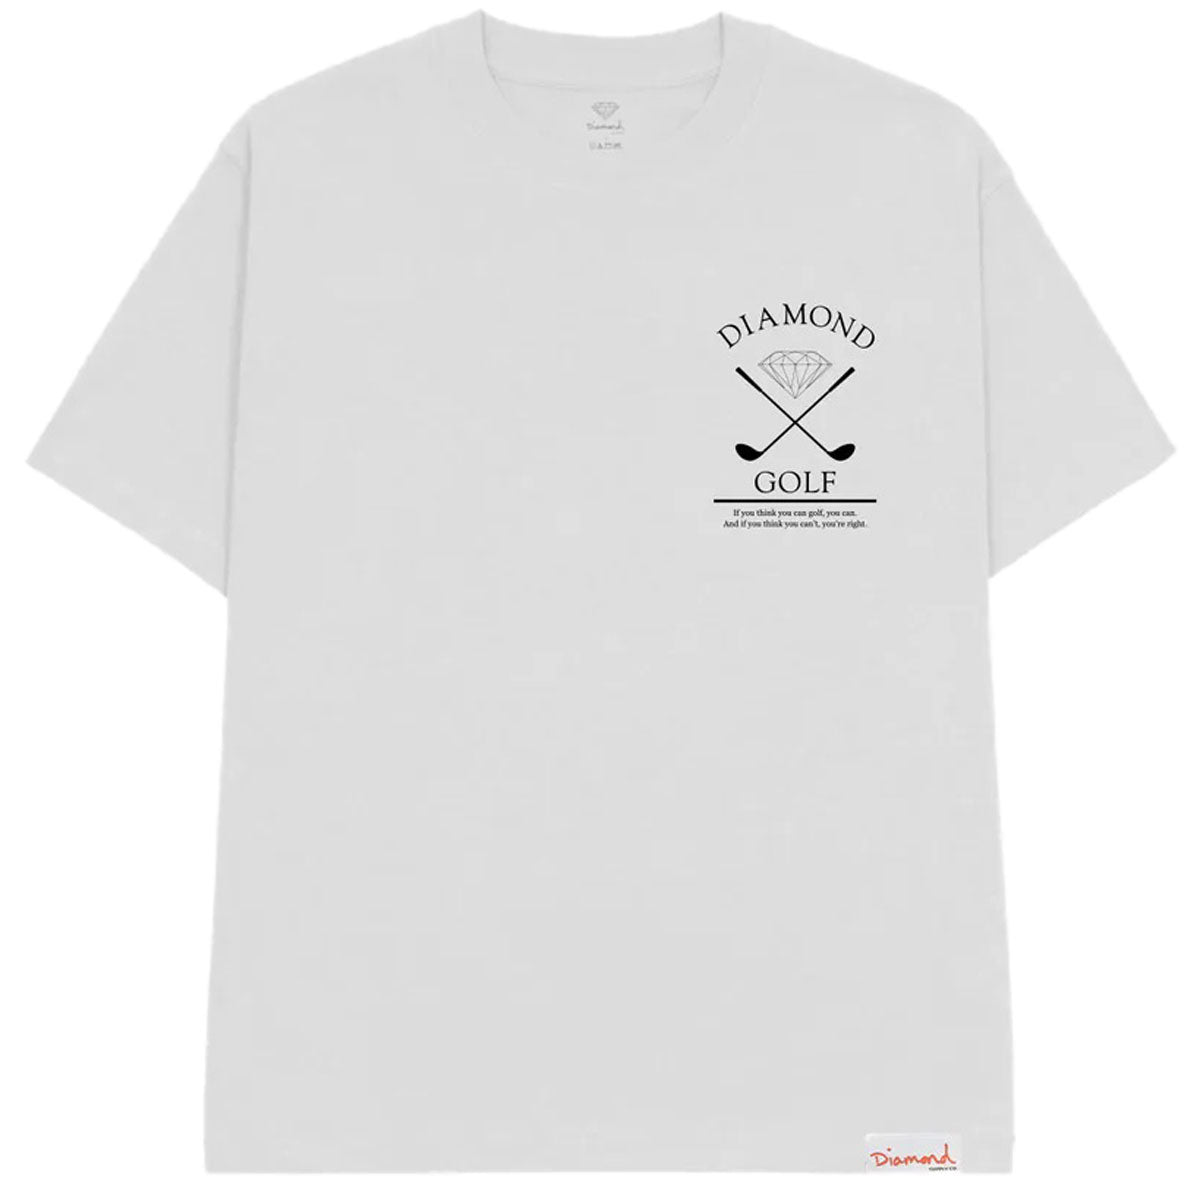 Diamond Supply Co. Golf T-Shirt - White image 1